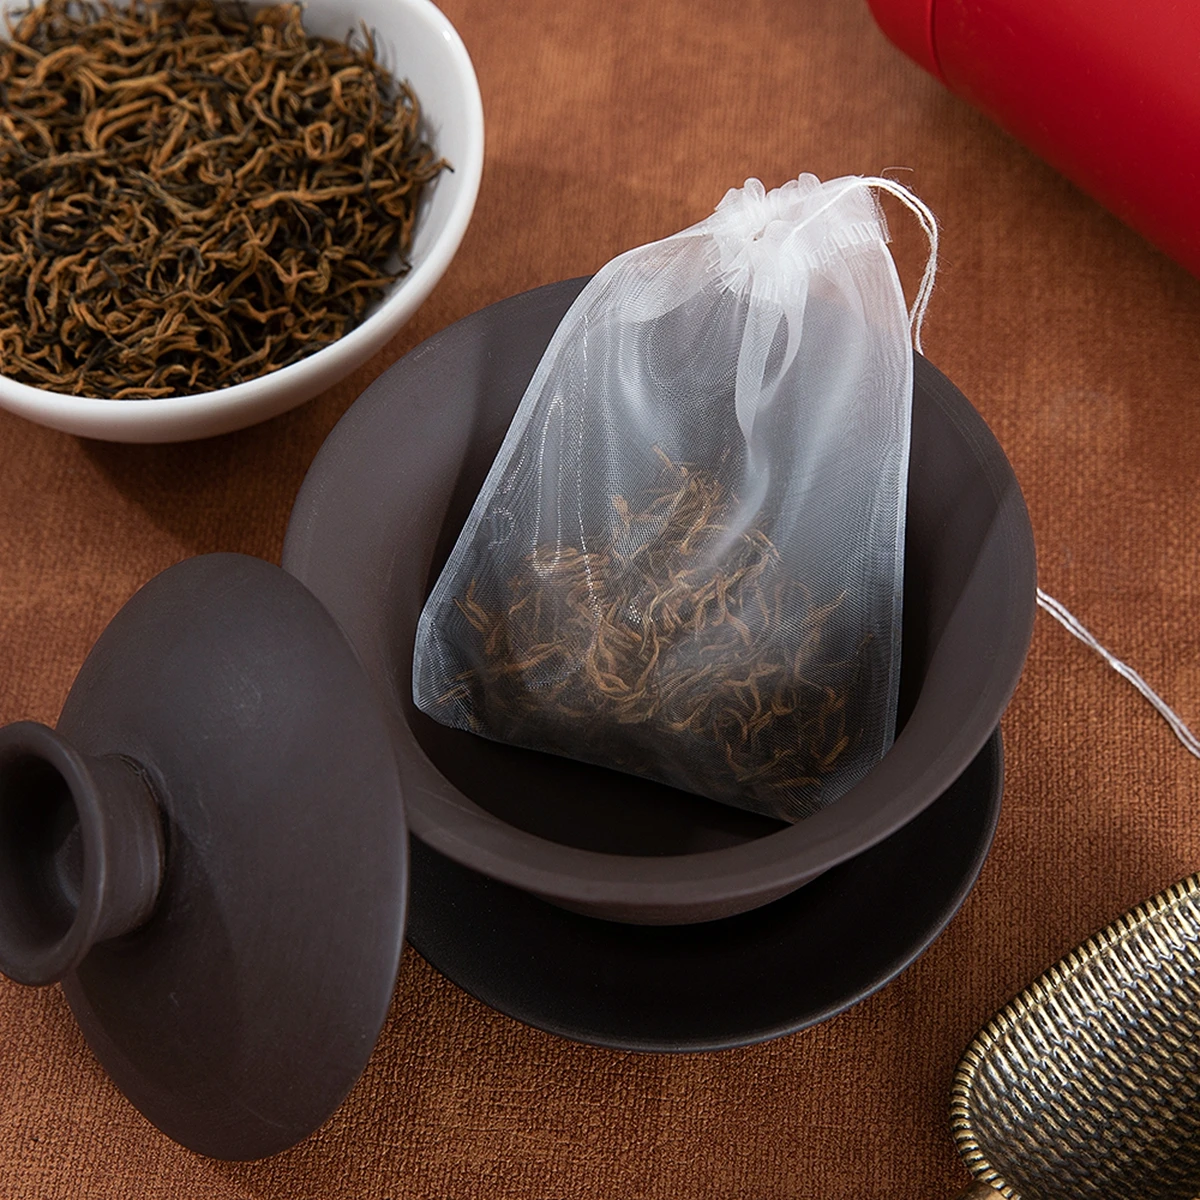 6x8/7x9/8x10/8x12cm 50pcs Transparent Nylon Tea Bags Reusable Tea Filter Bags for Spice Tea Infuser Strainers Spice Herb Teabags